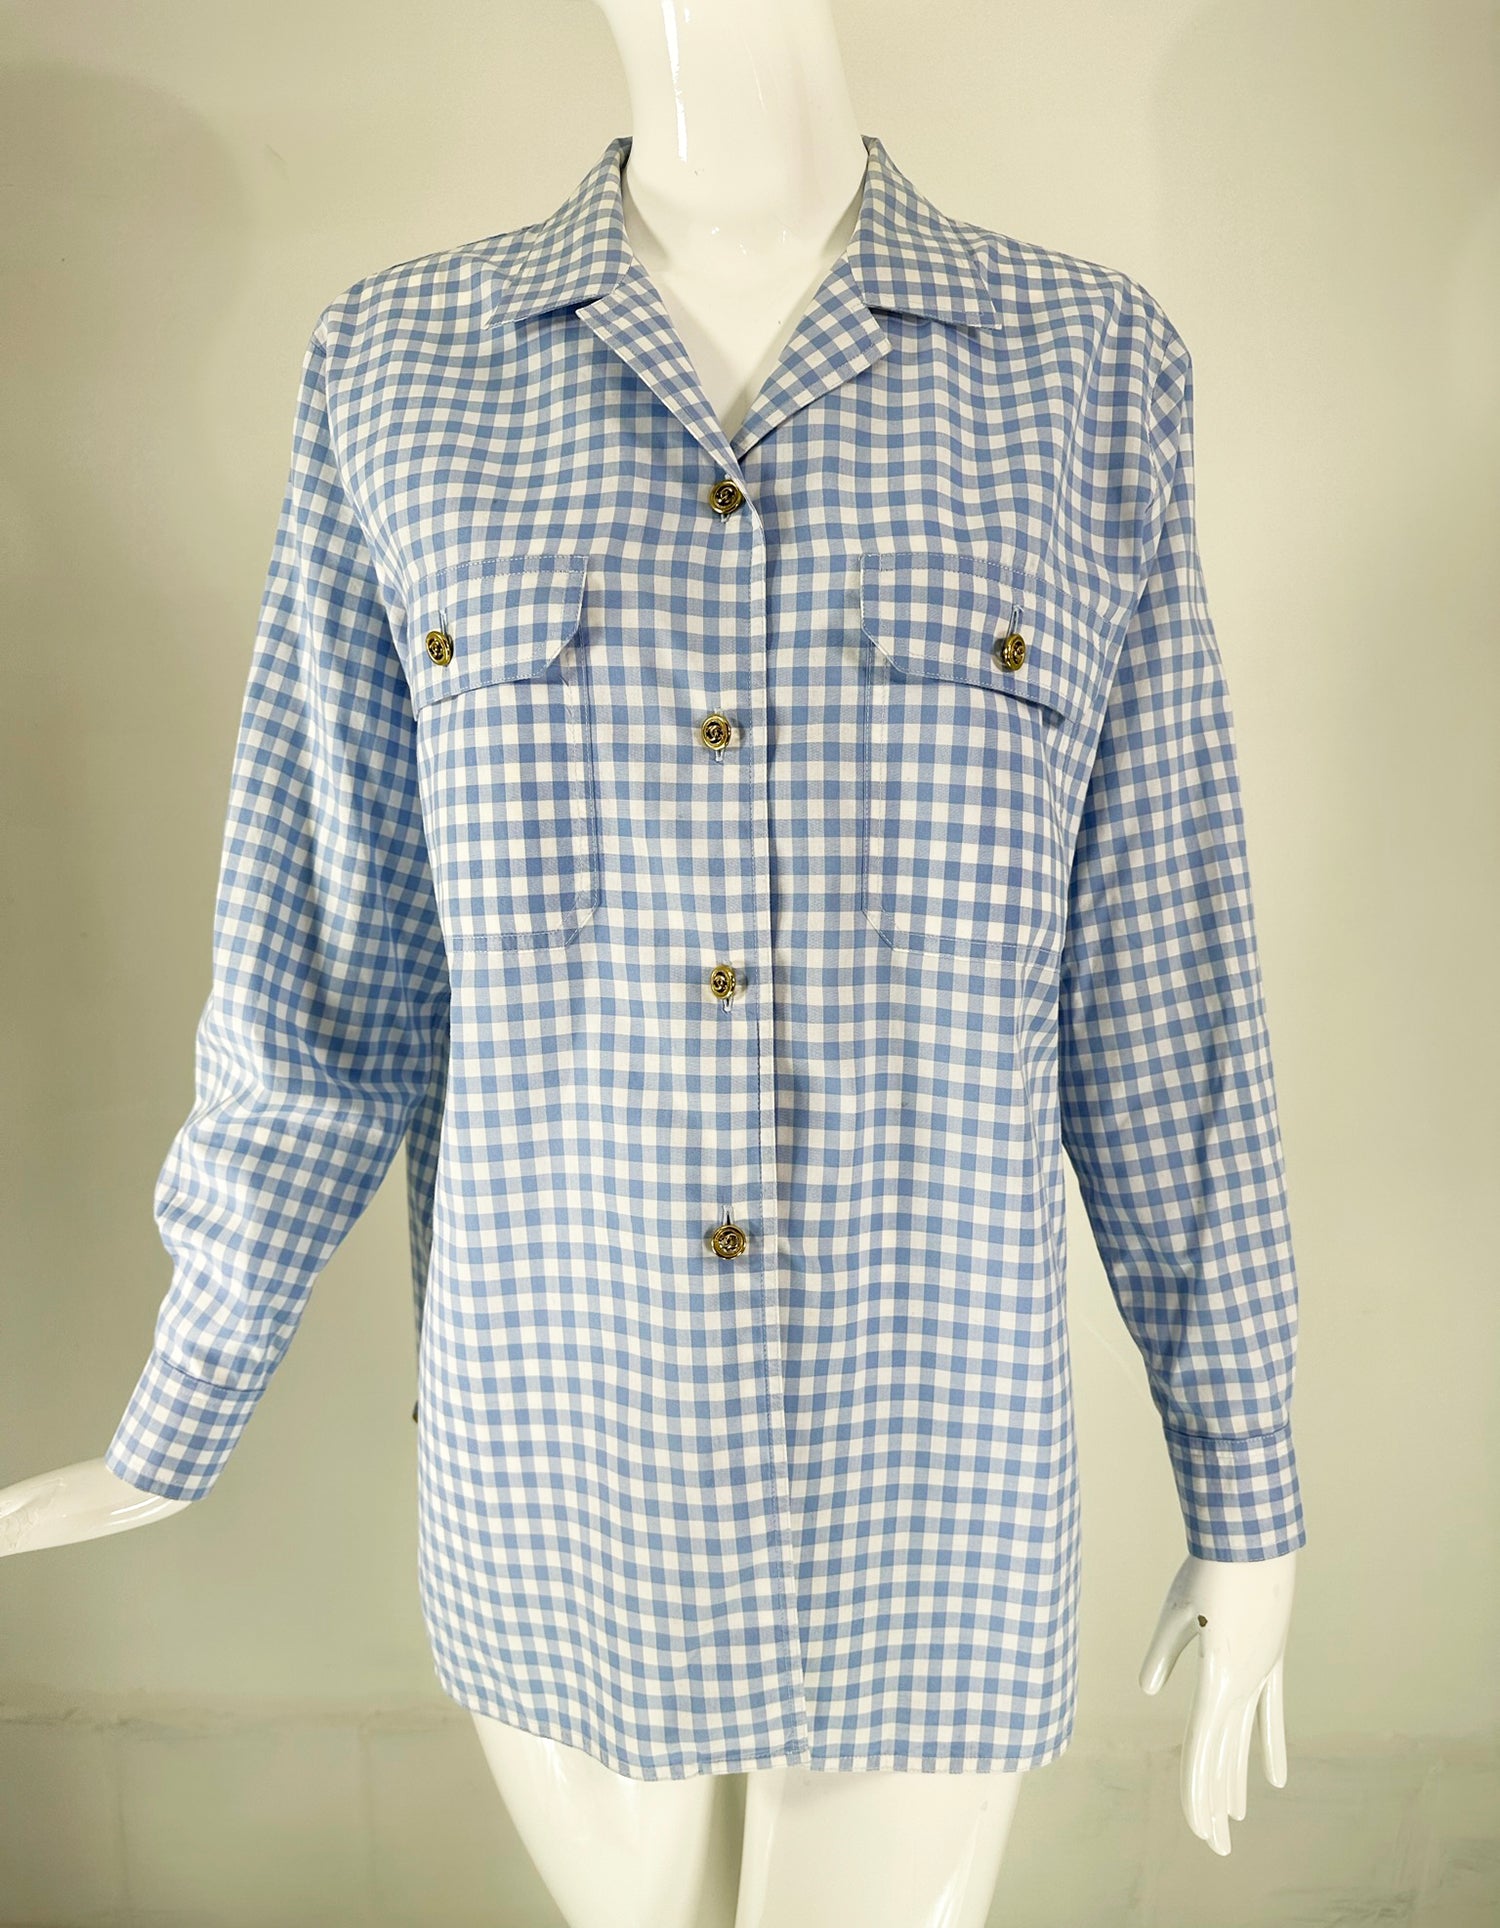 Vintage Chanel button up blouse